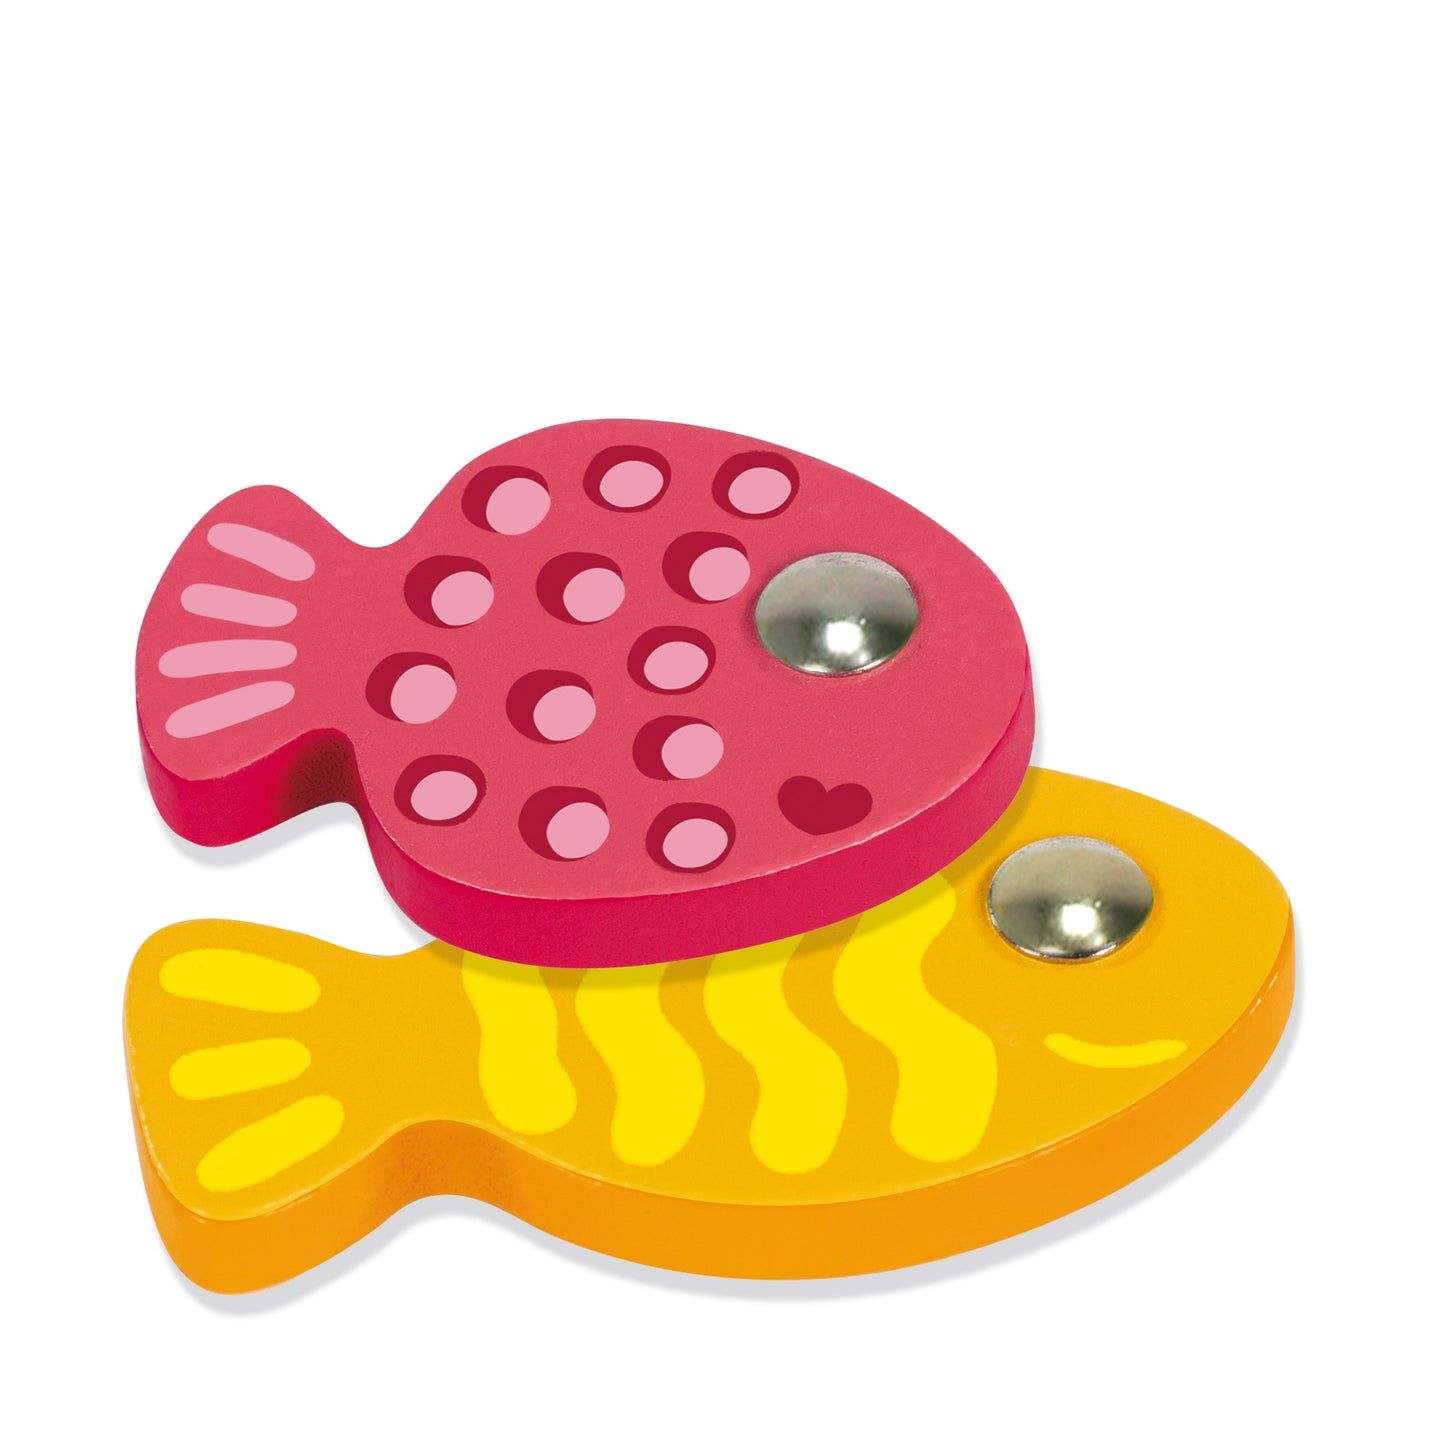 Fishing game - product image - Jumboplay.com